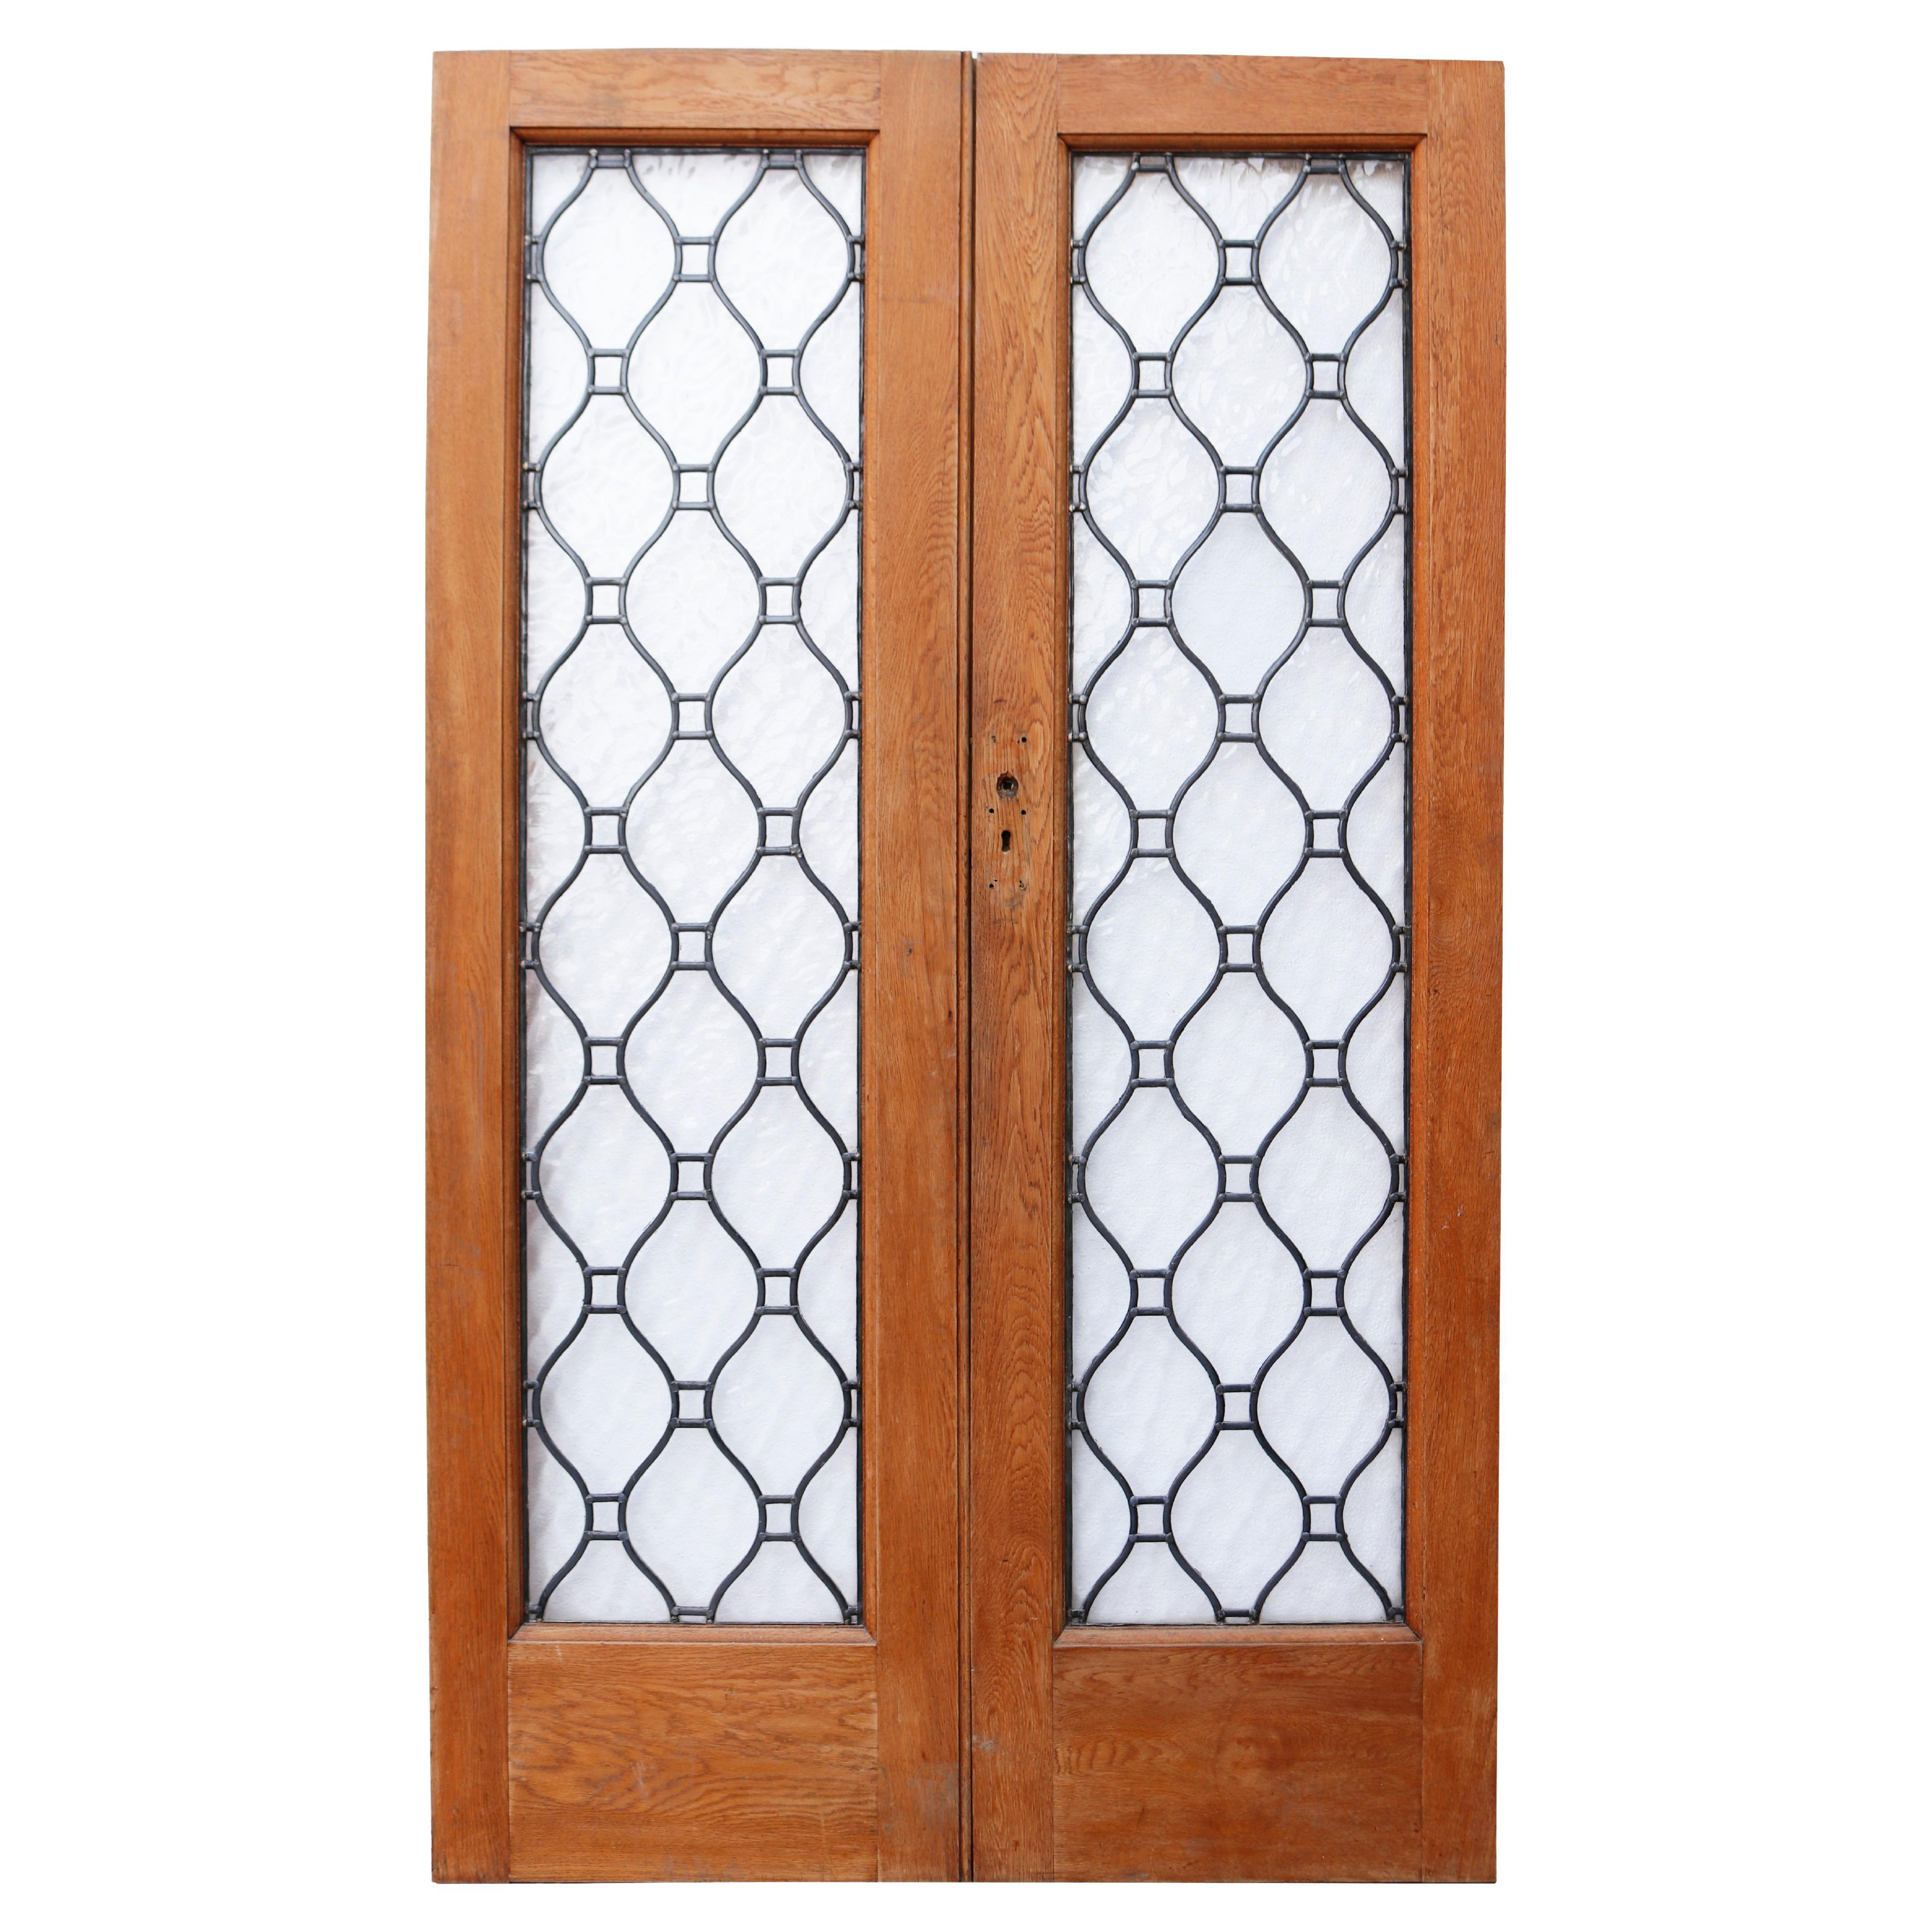 Set of Reclaimed Oak Doors For Sale